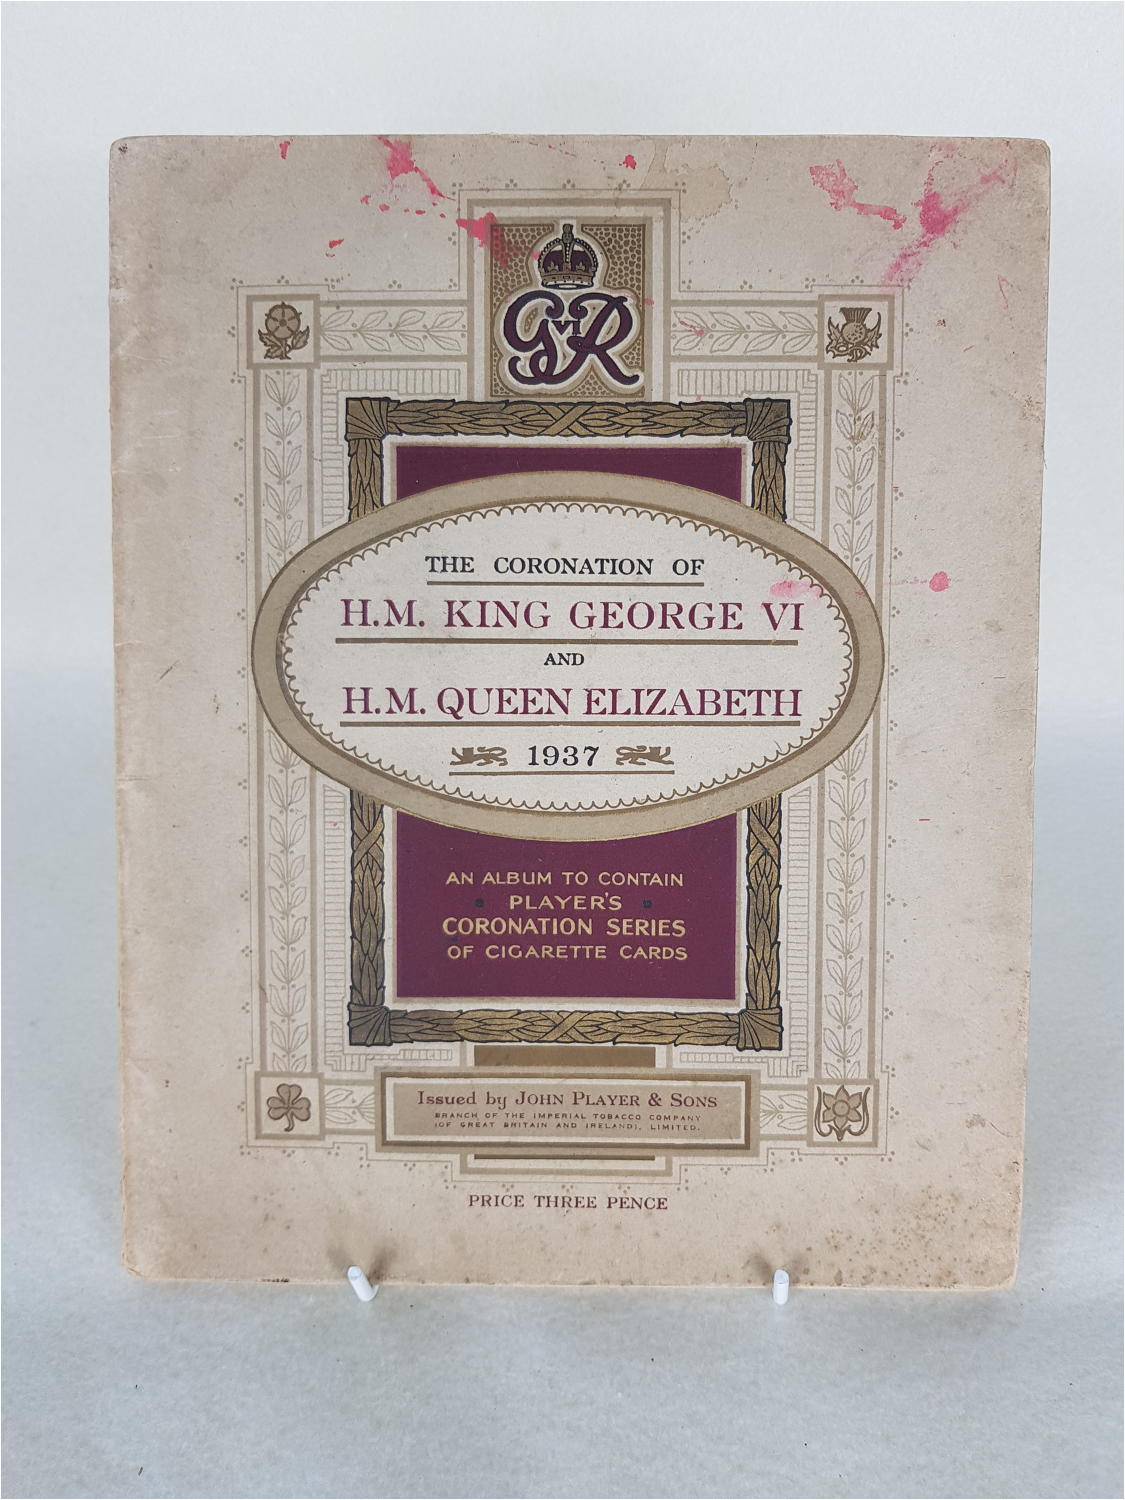 john player coronation of king george vi cigarette card album 1937 10272 main size3 jpg